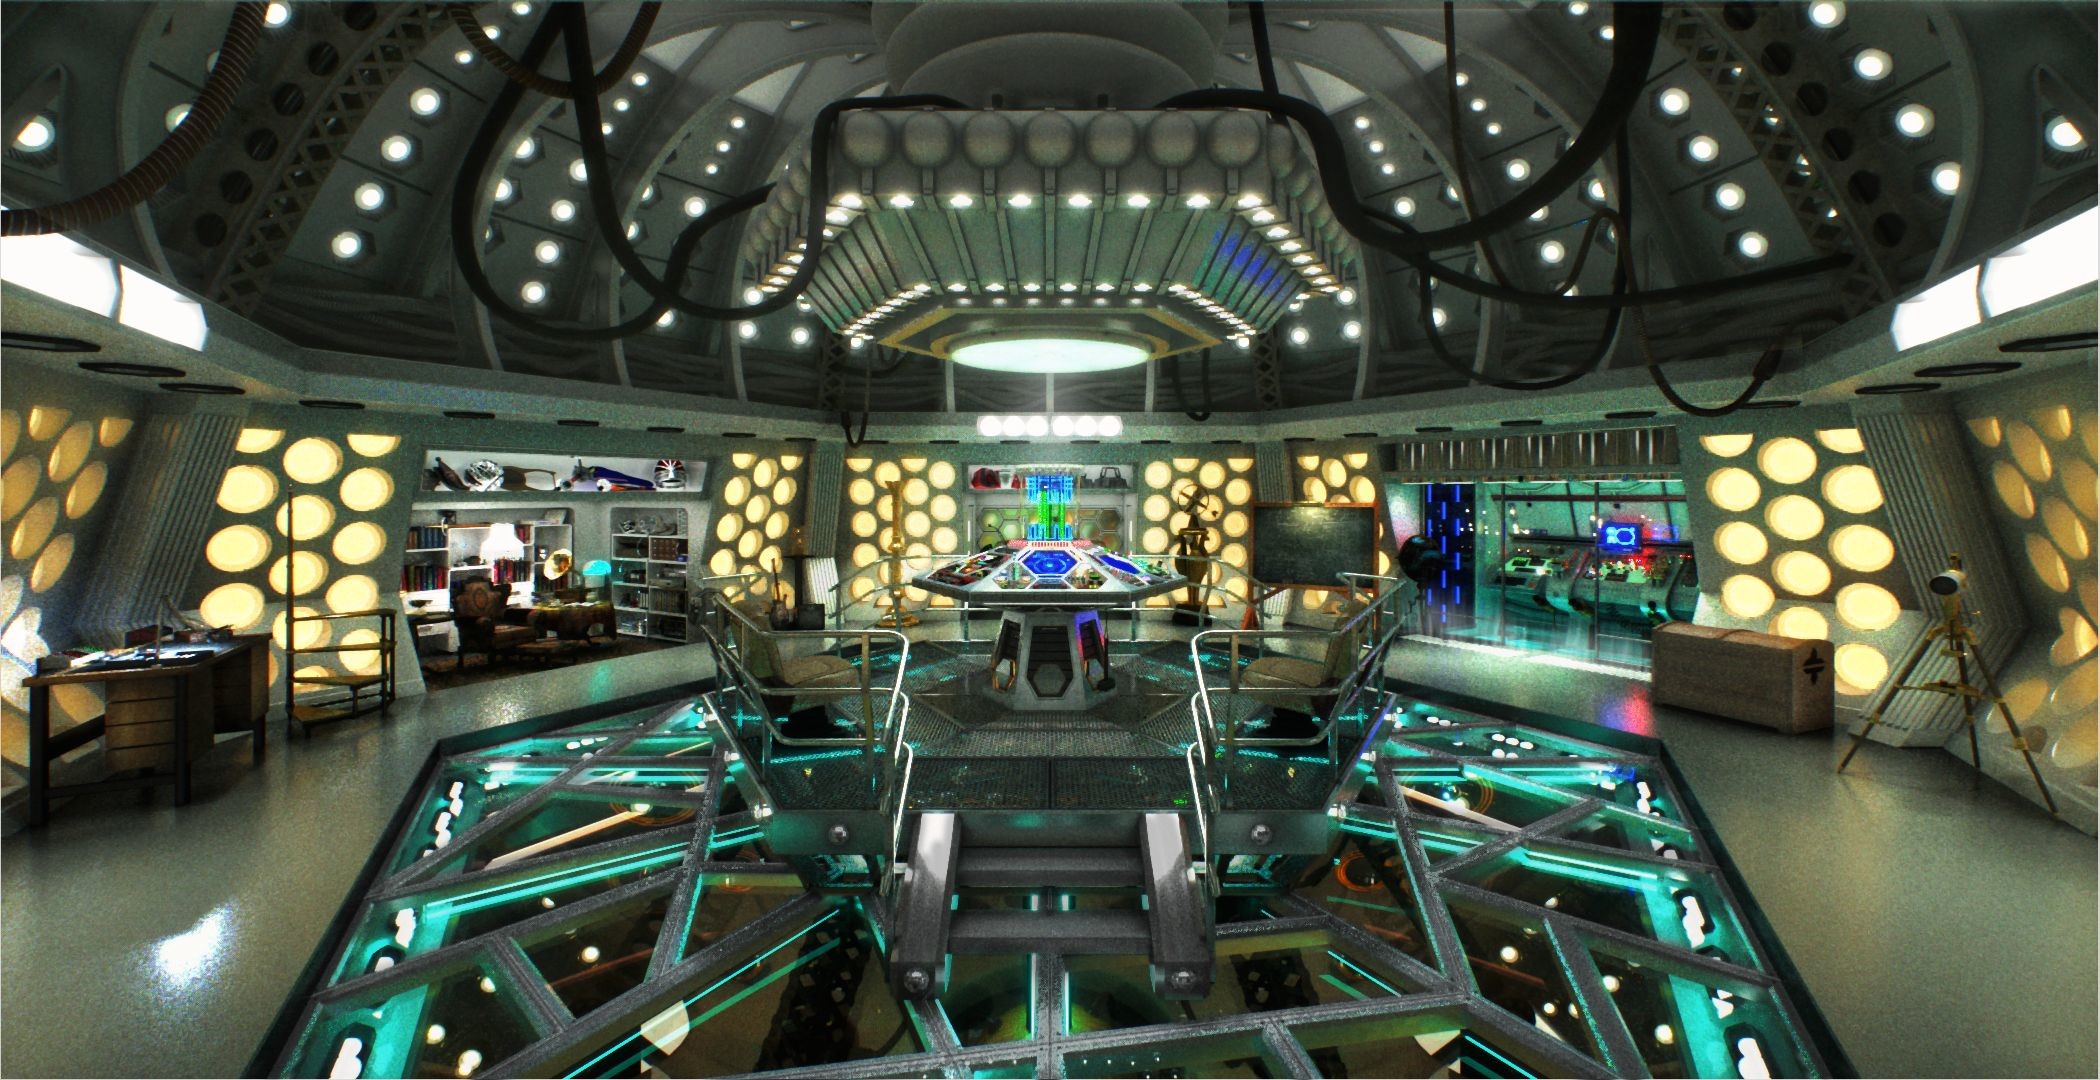 2100x1080 TARDIS 2015 Interior custom | Rob's 3D Doctor Who site! | Doctor Who |  Pinterest | Tardis and Halo reach